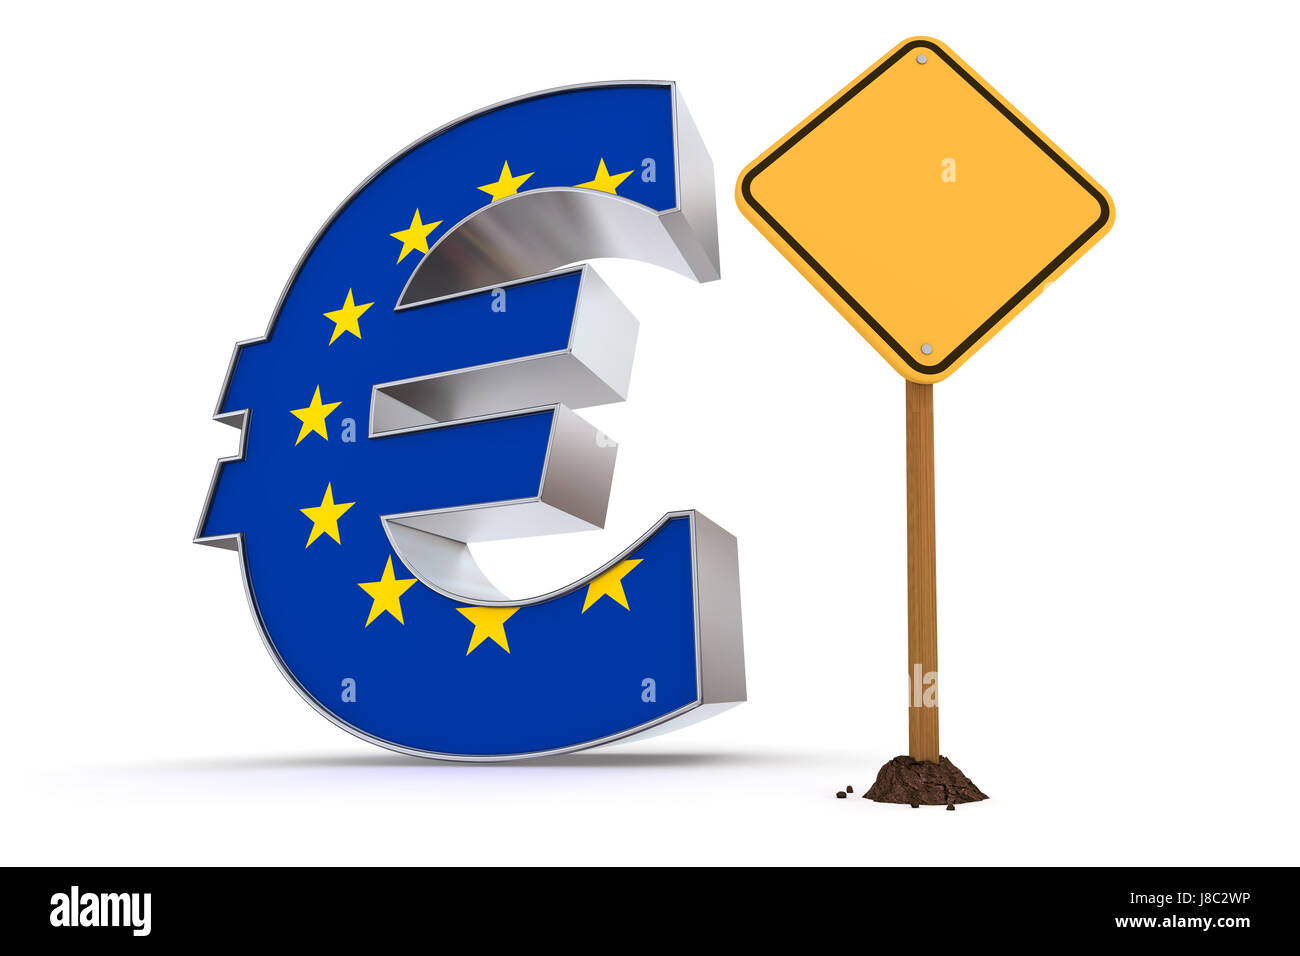 sign, signal, currency, traffic, transportation, euro, union, warning, Stock Photo